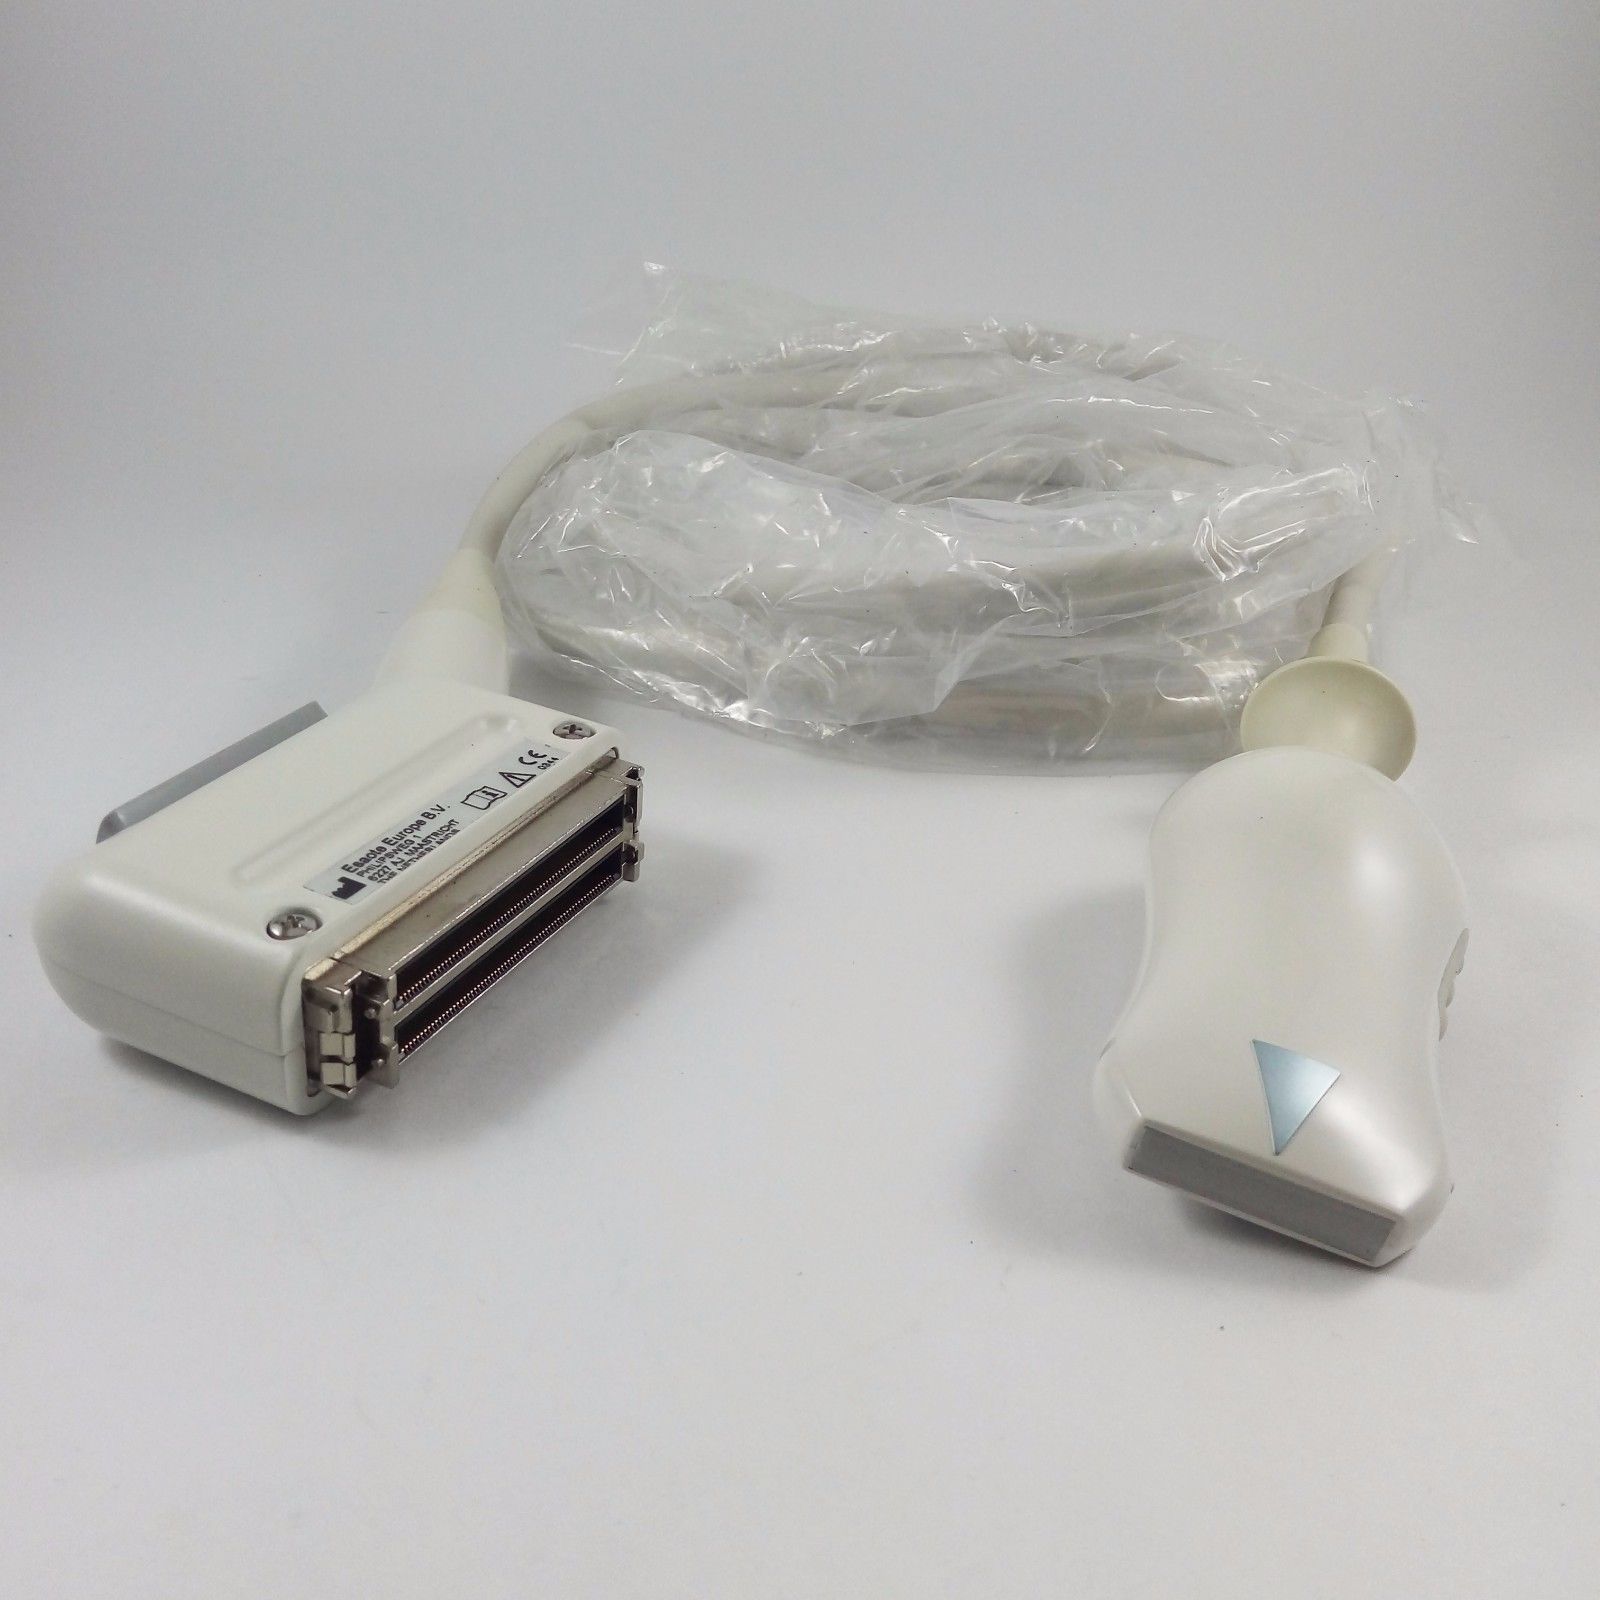 ESAOTE NEW SL3235 Ultrasound Probe DIAGNOSTIC ULTRASOUND MACHINES FOR SALE